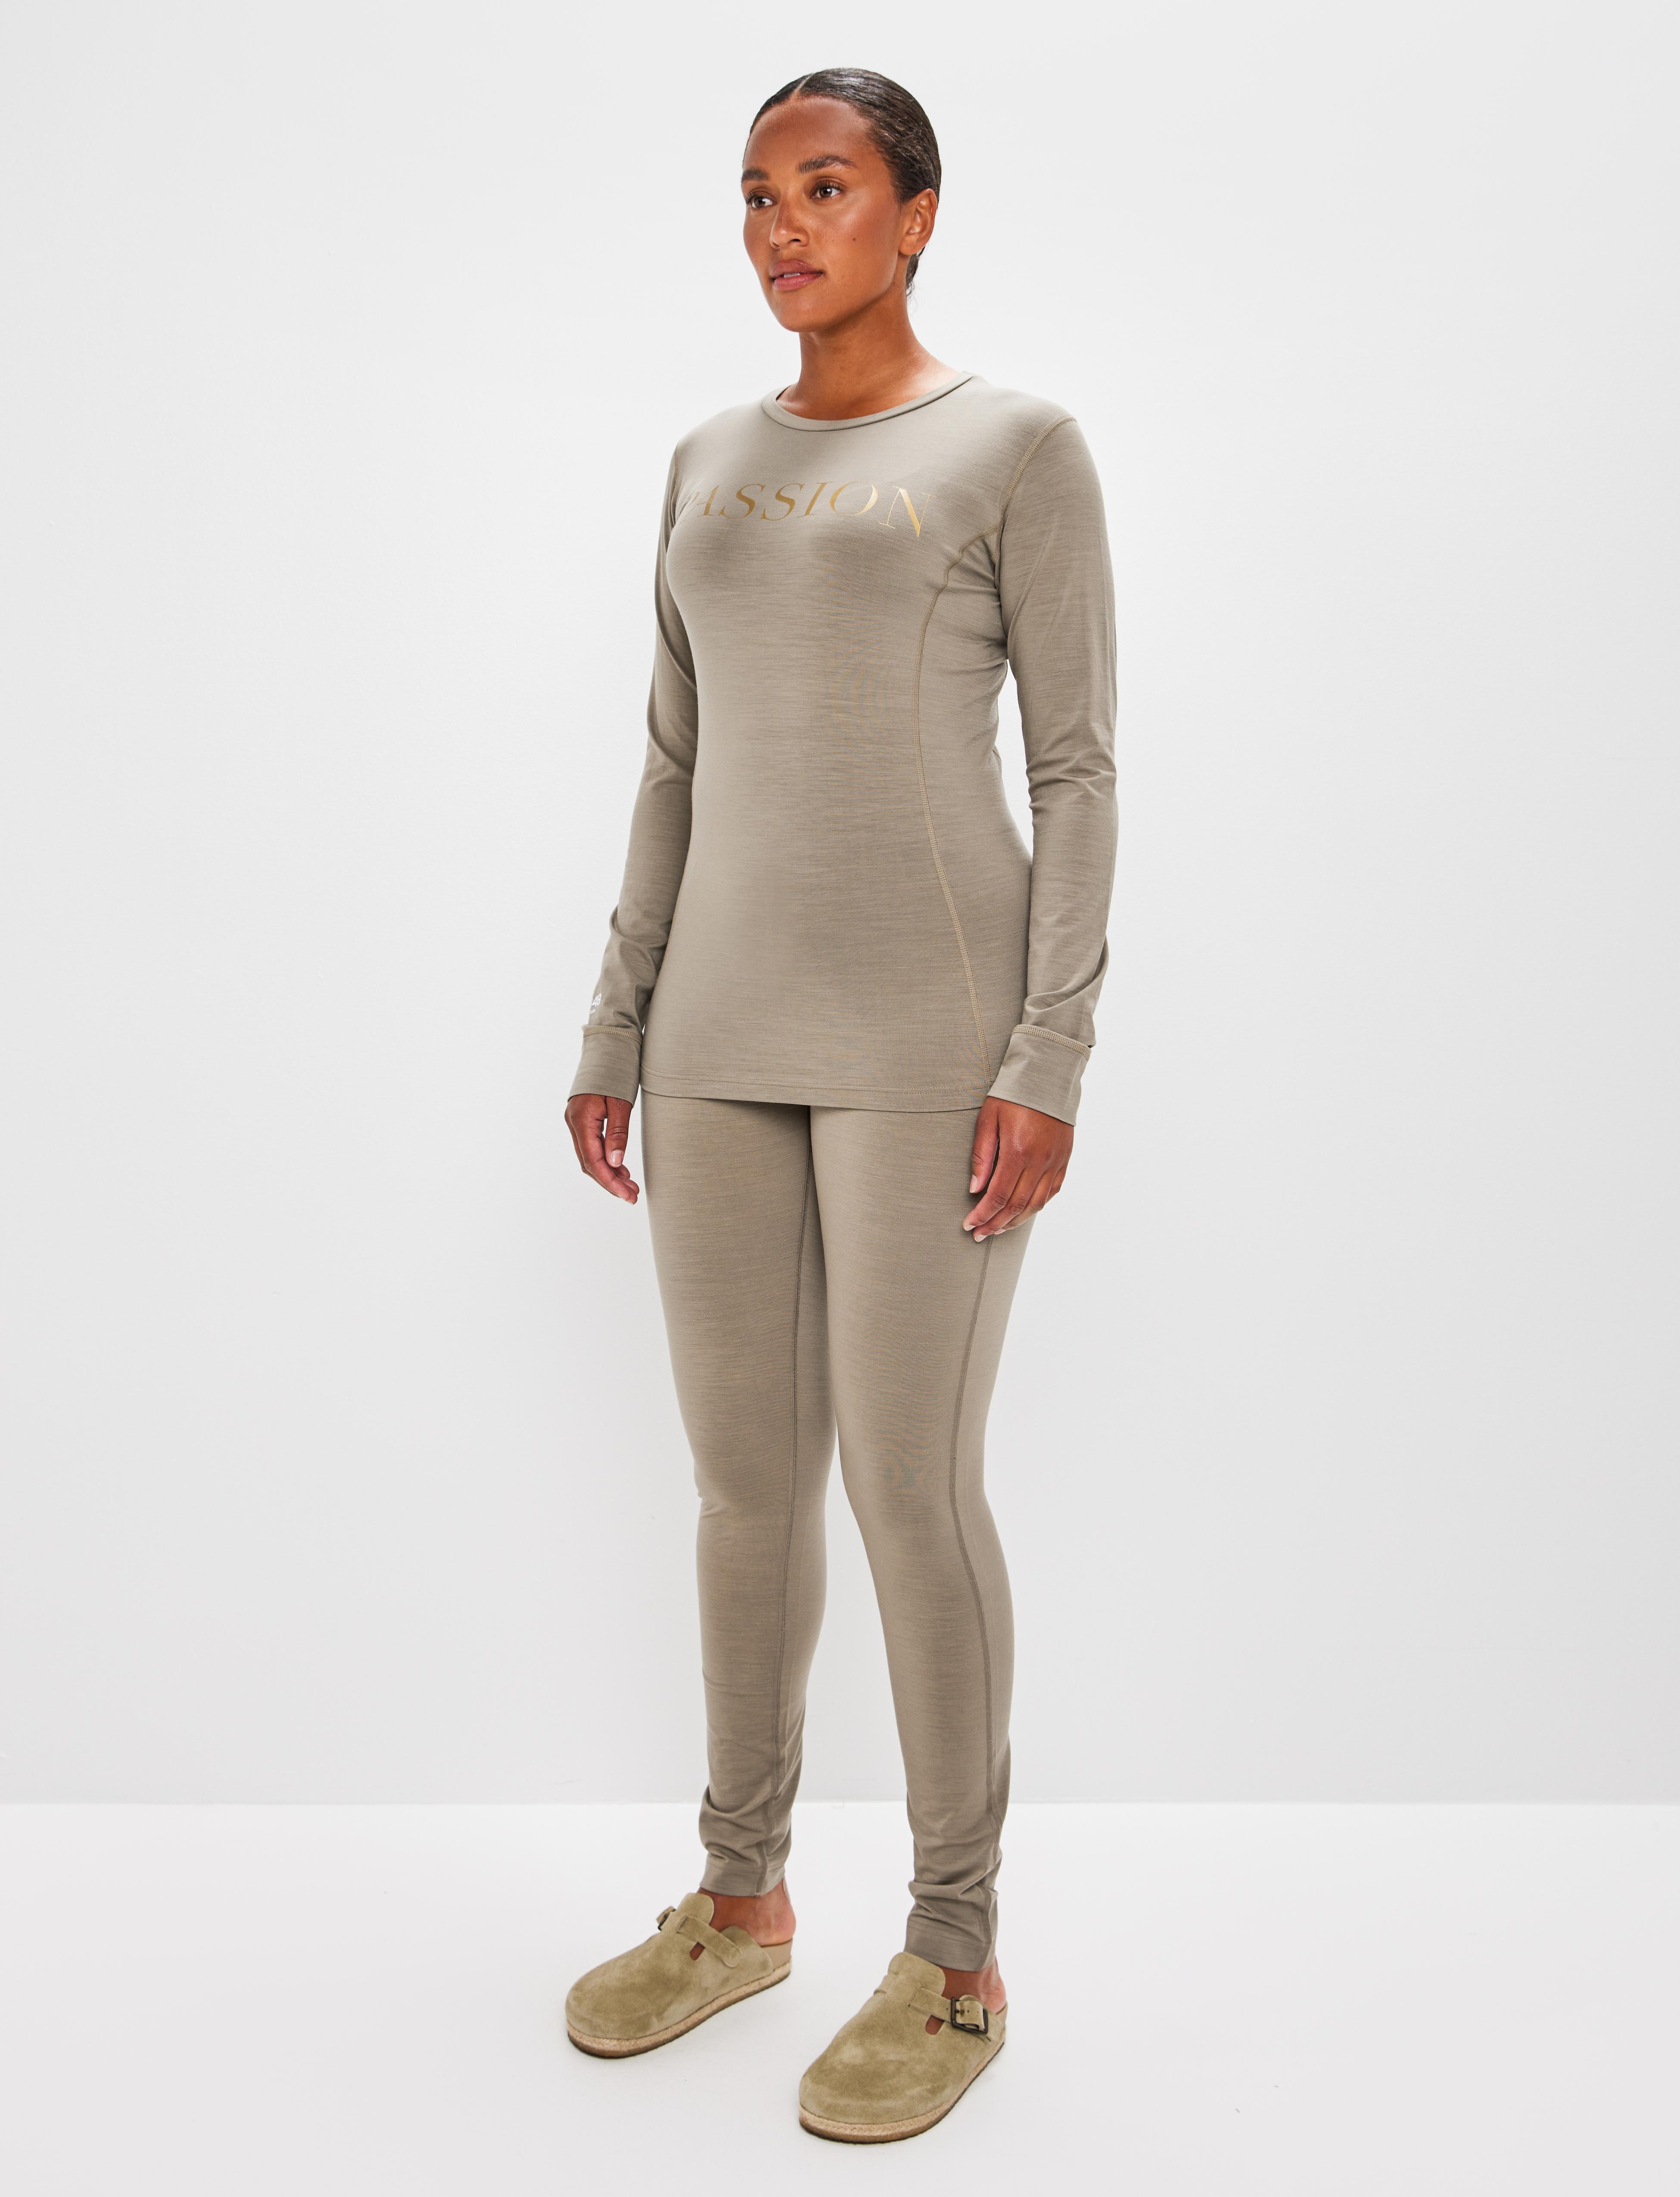 Shop women\'s merino wool underwear online - 8848 Altitude